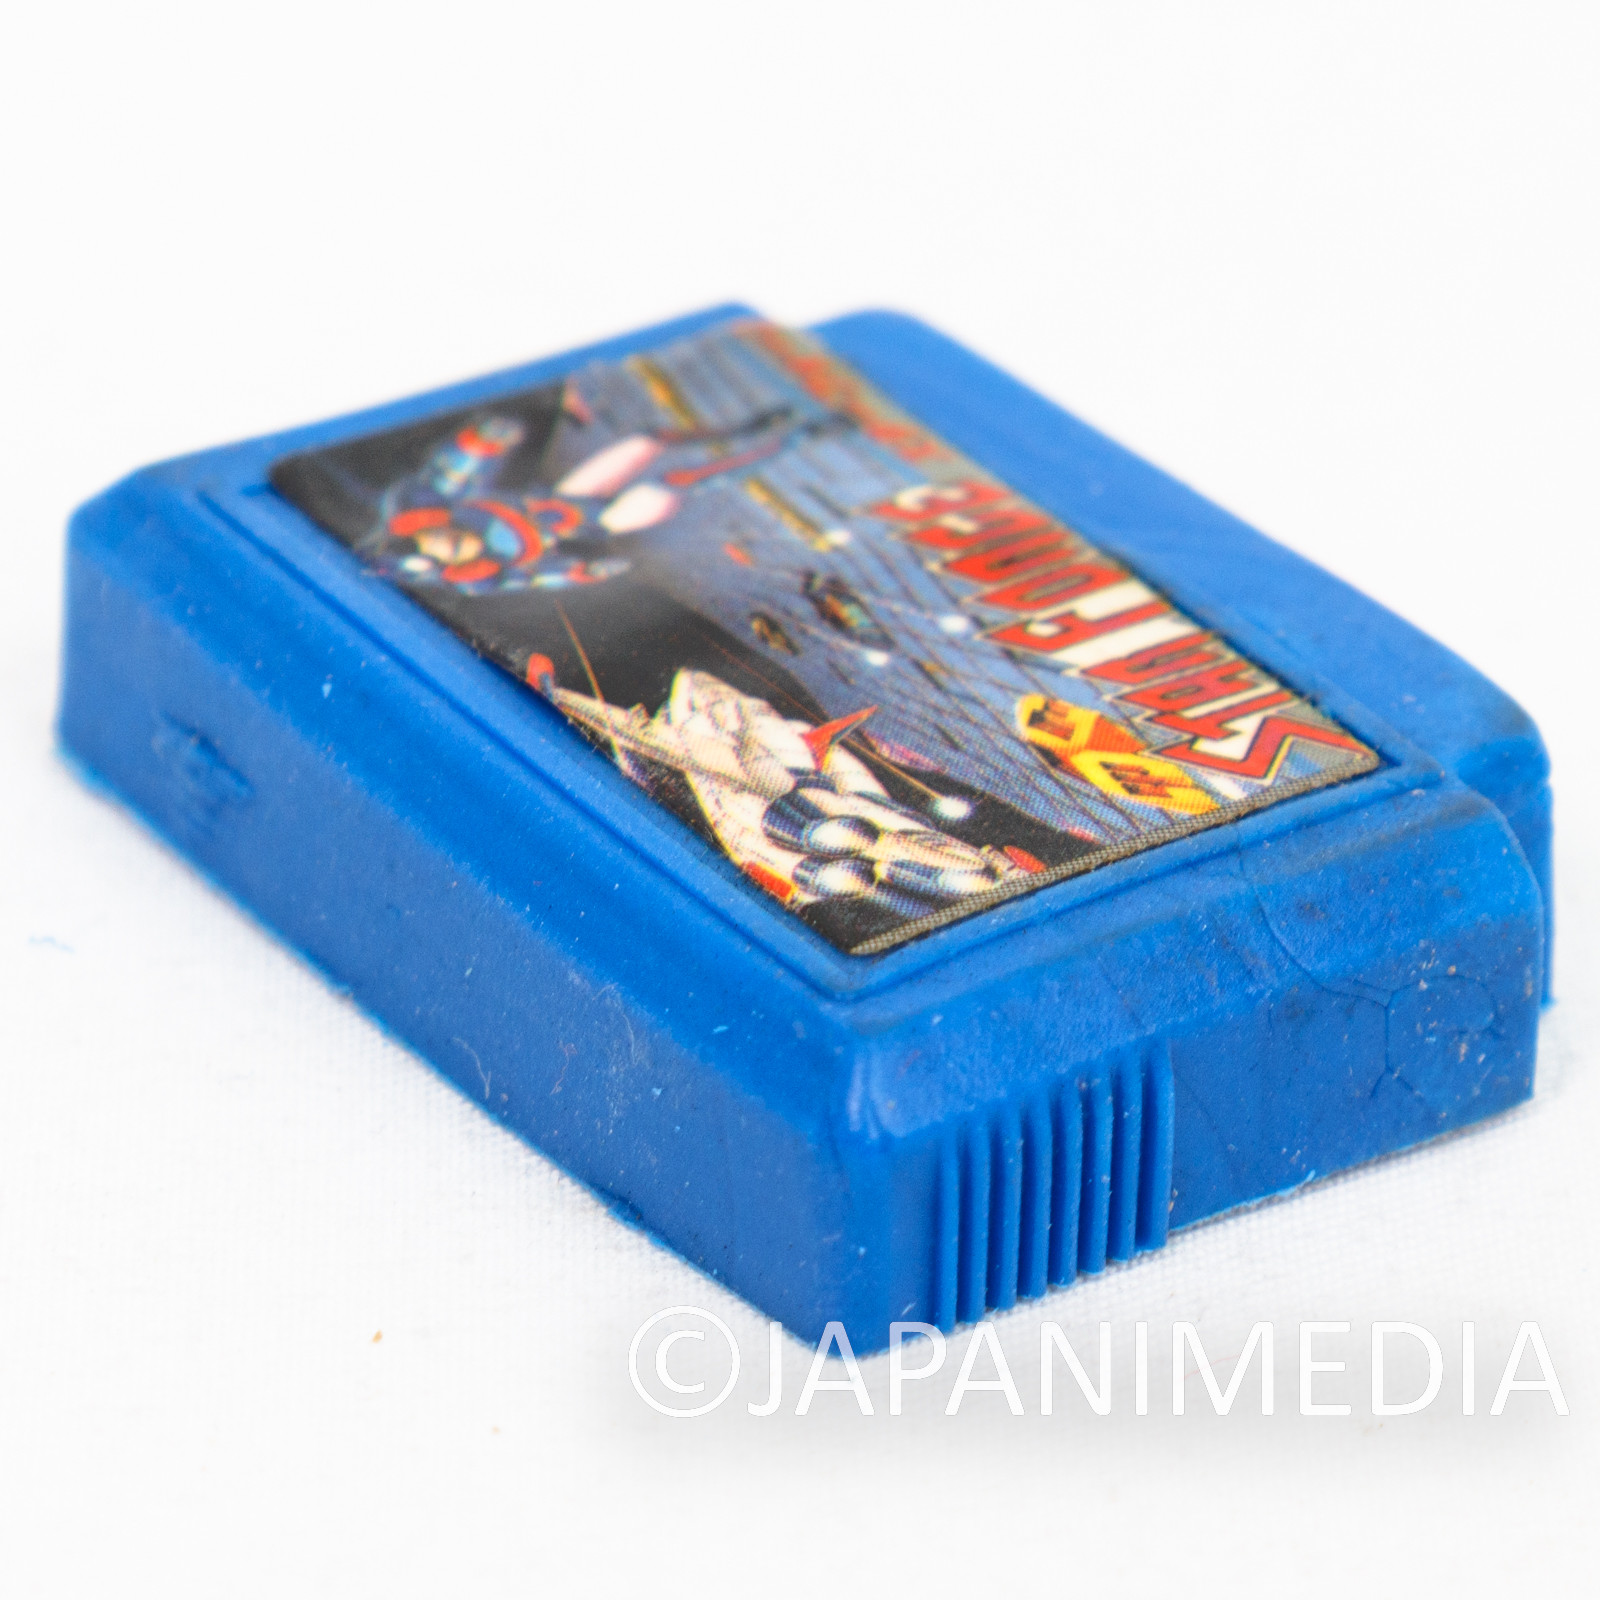 Star Force Cassette Mini Eraser AMADA JAPAN FAMICOM NES Nintendo